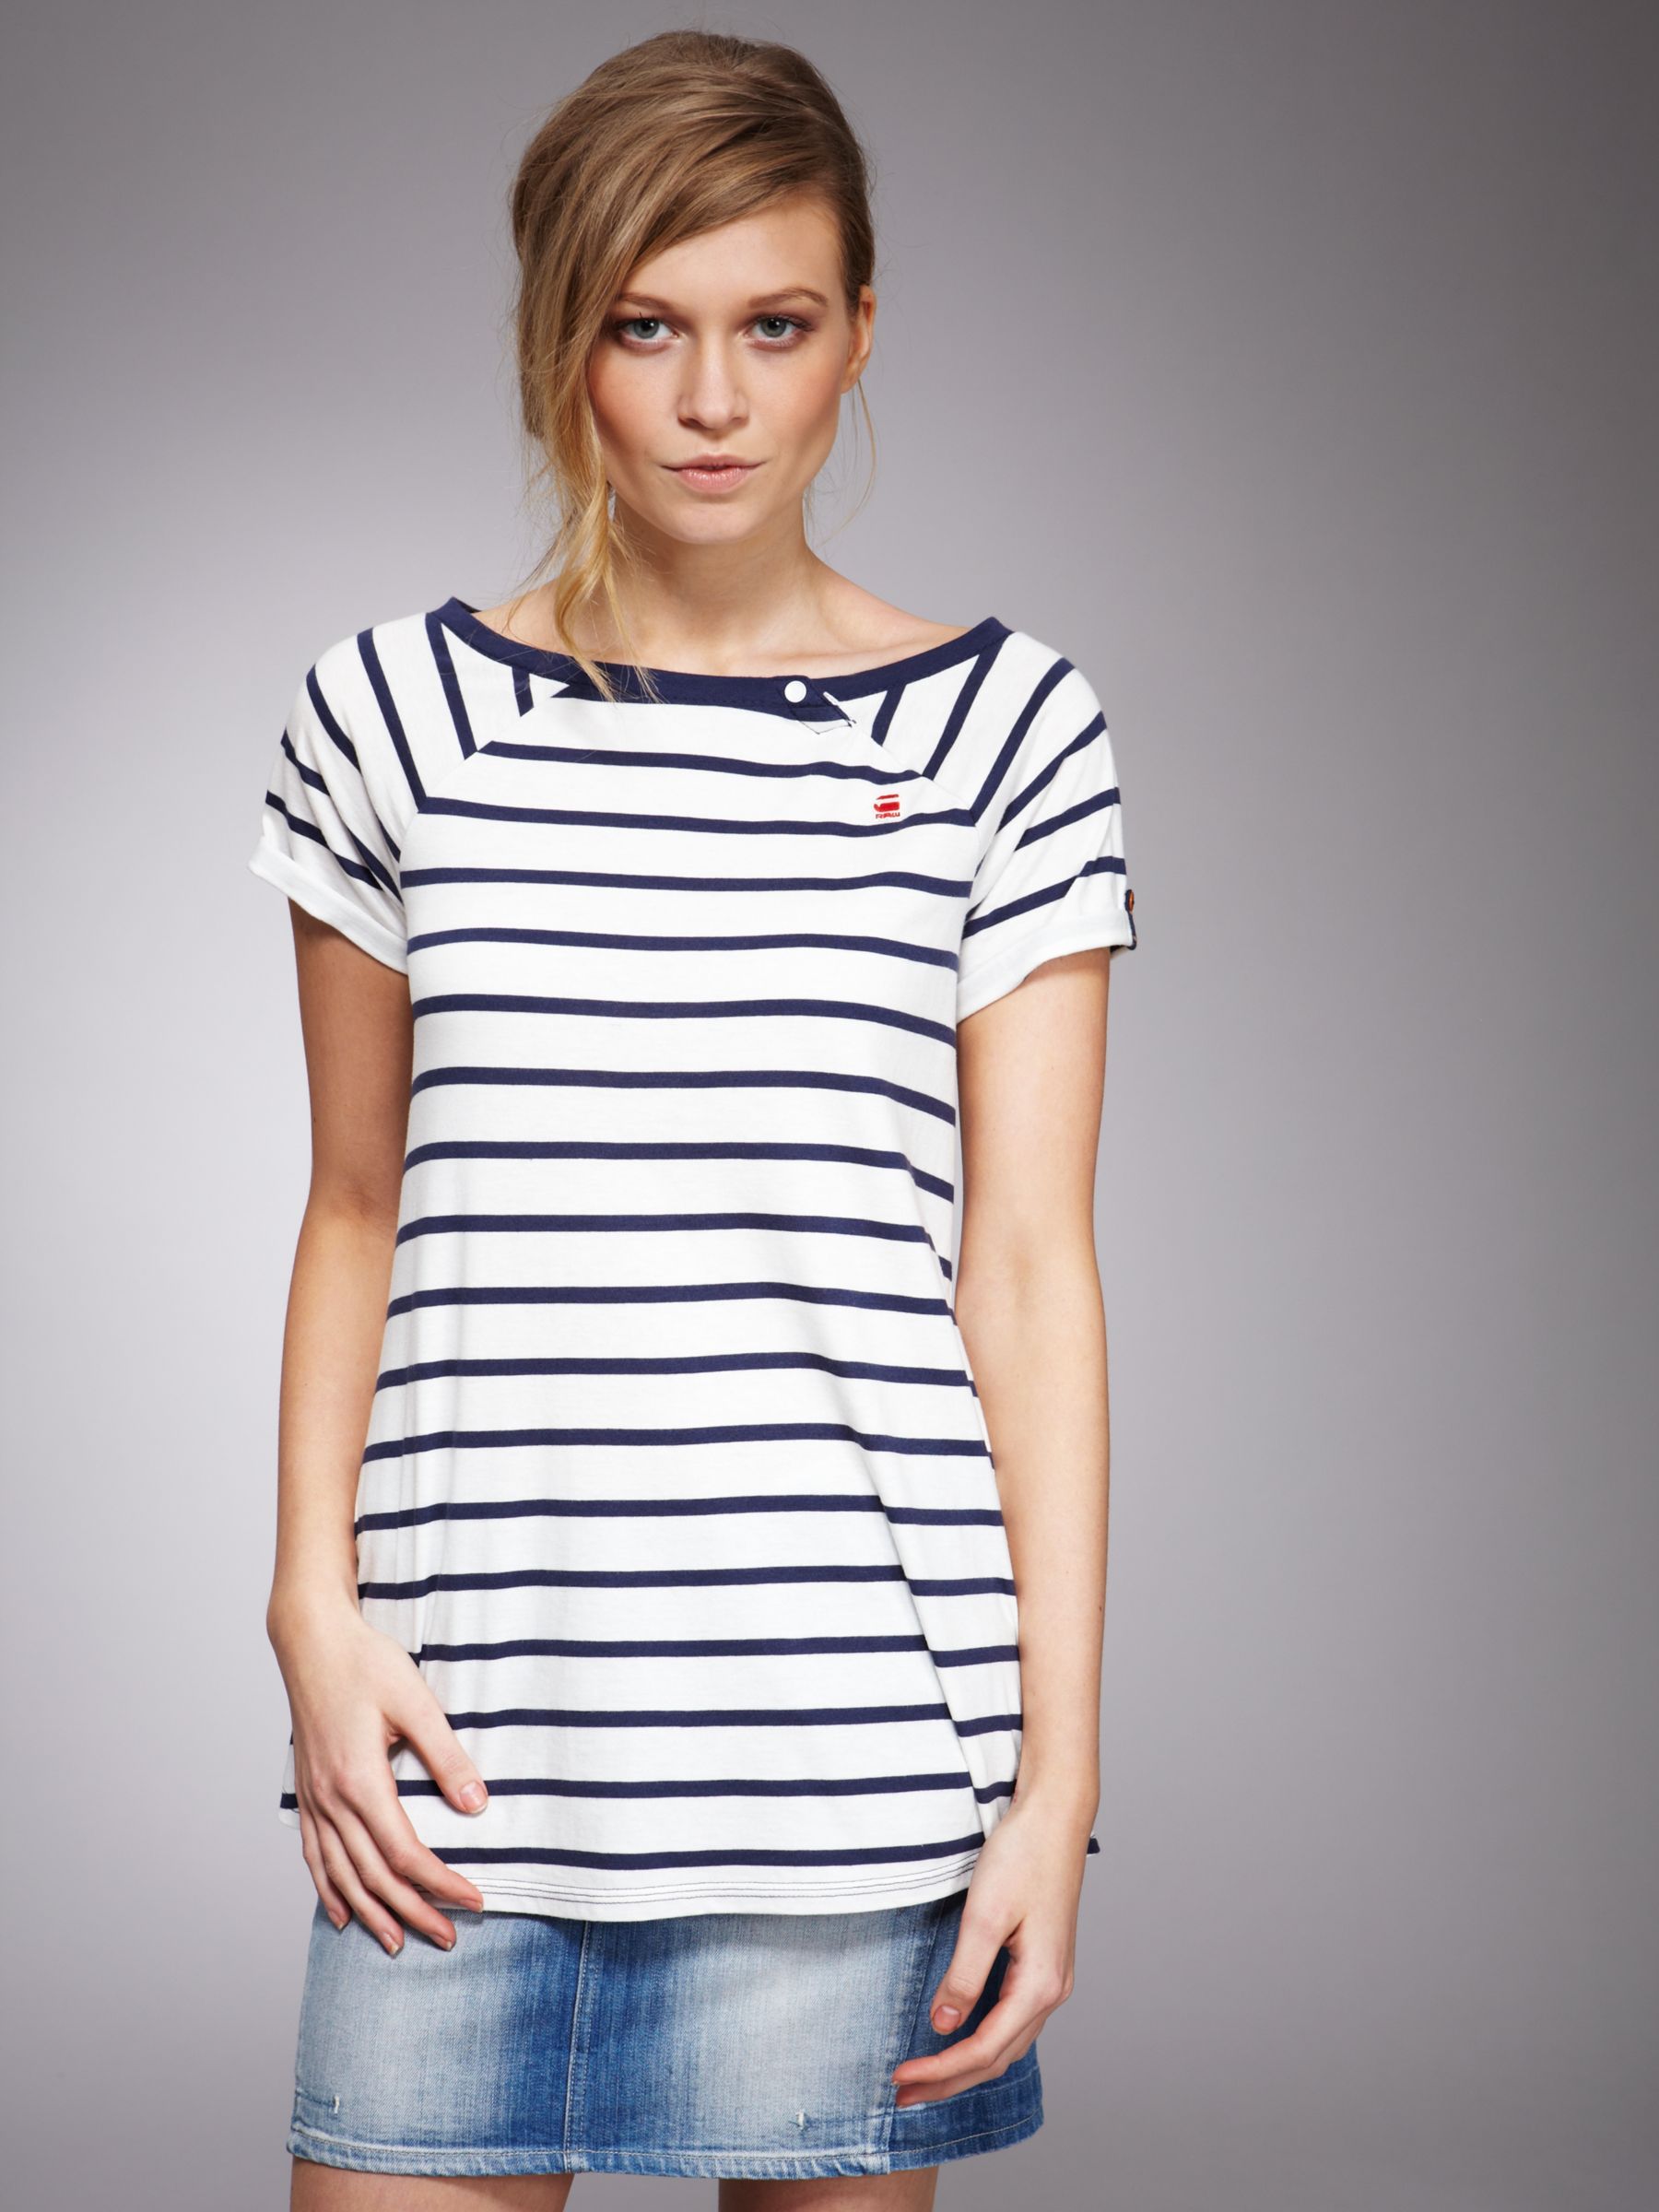 G Star Raw Nautical Striped T-Shirt, Multi